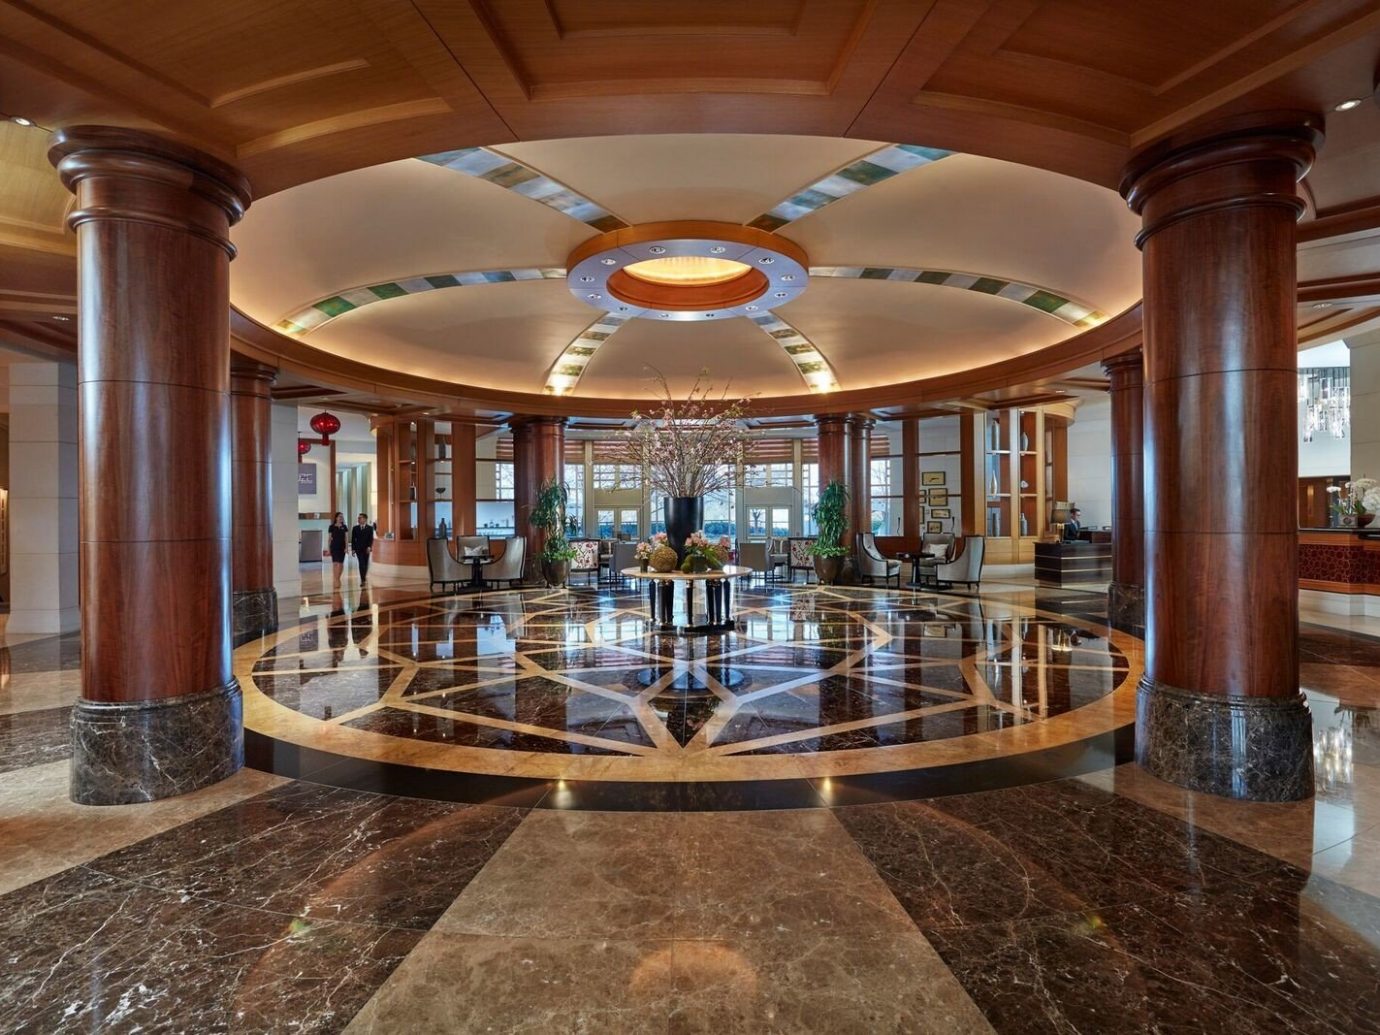 Hotels ceiling indoor Lobby building estate interior design real estate hall furniture